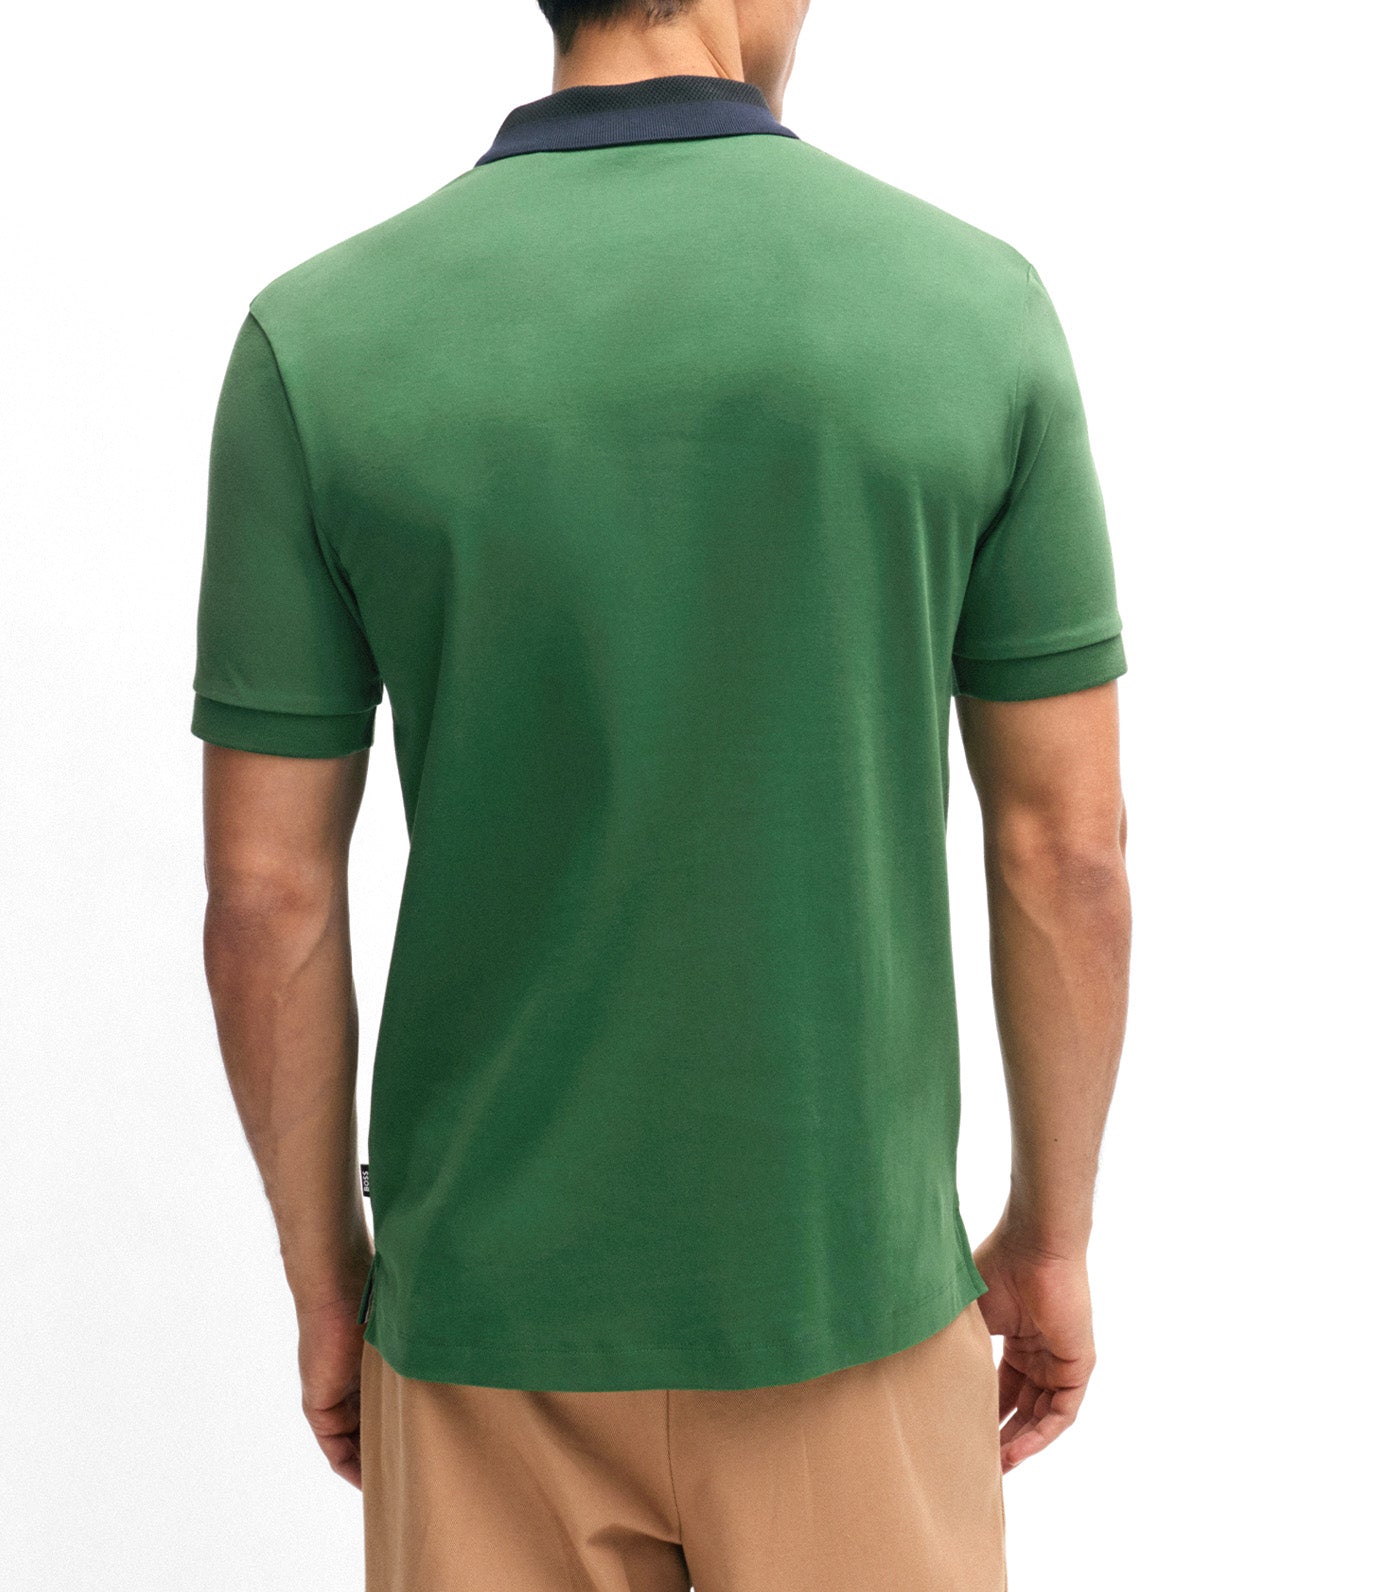 Interlock-Cotton Polo Shirt with Color-Blocked Collar Green